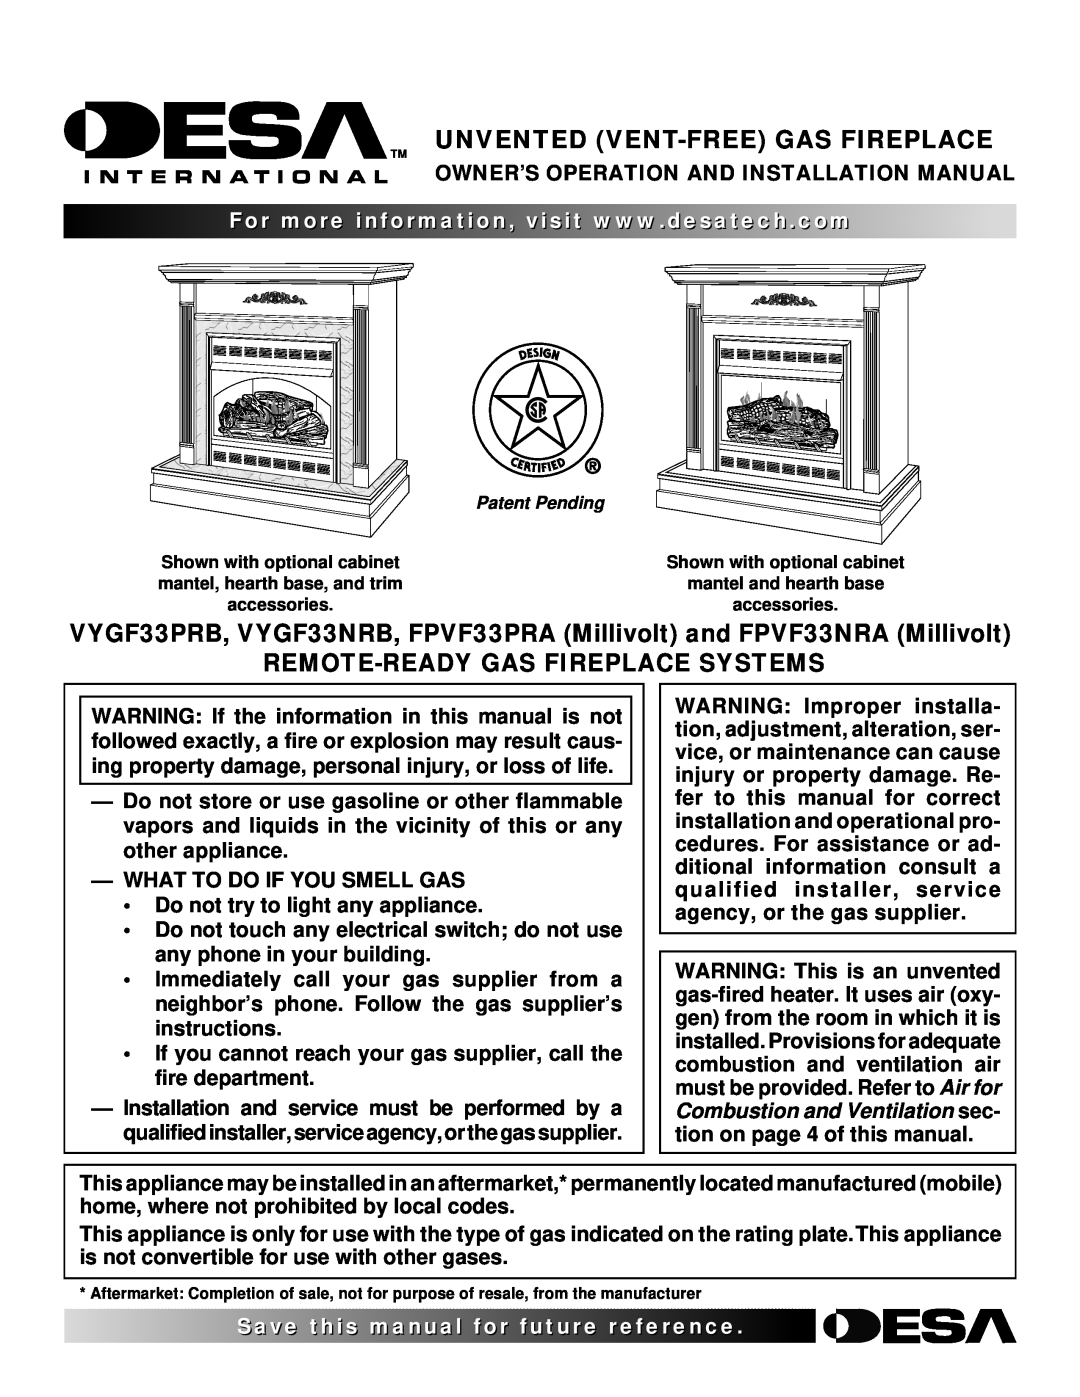 Desa FPVF33NRA installation manual Owner’S Operation And Installation Manual, What To Do If You Smell Gas, Qqqq¢¢¢¢ 